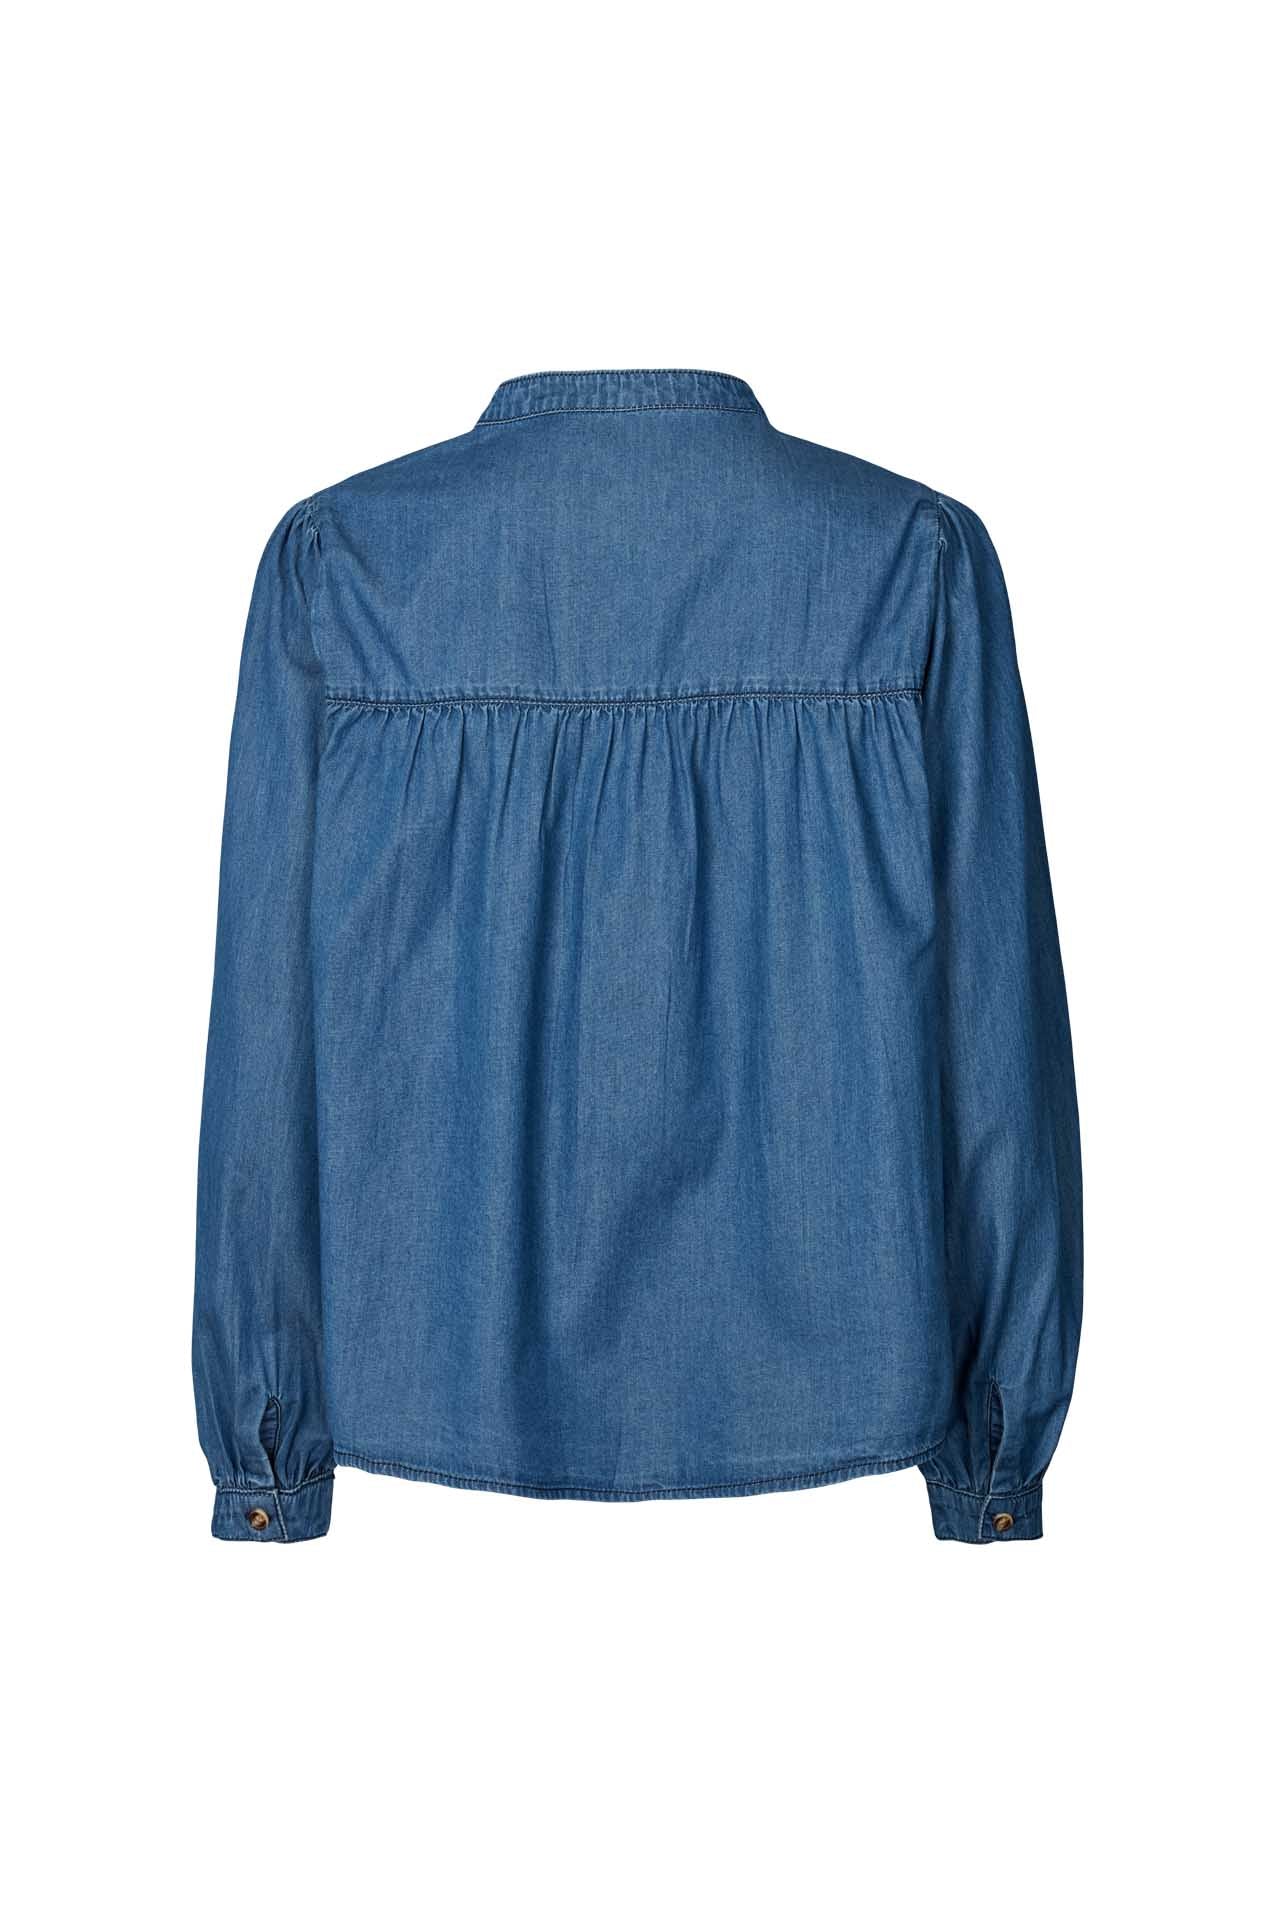 Lollys Laundry Nicky Shirt Shirt 20 Blue